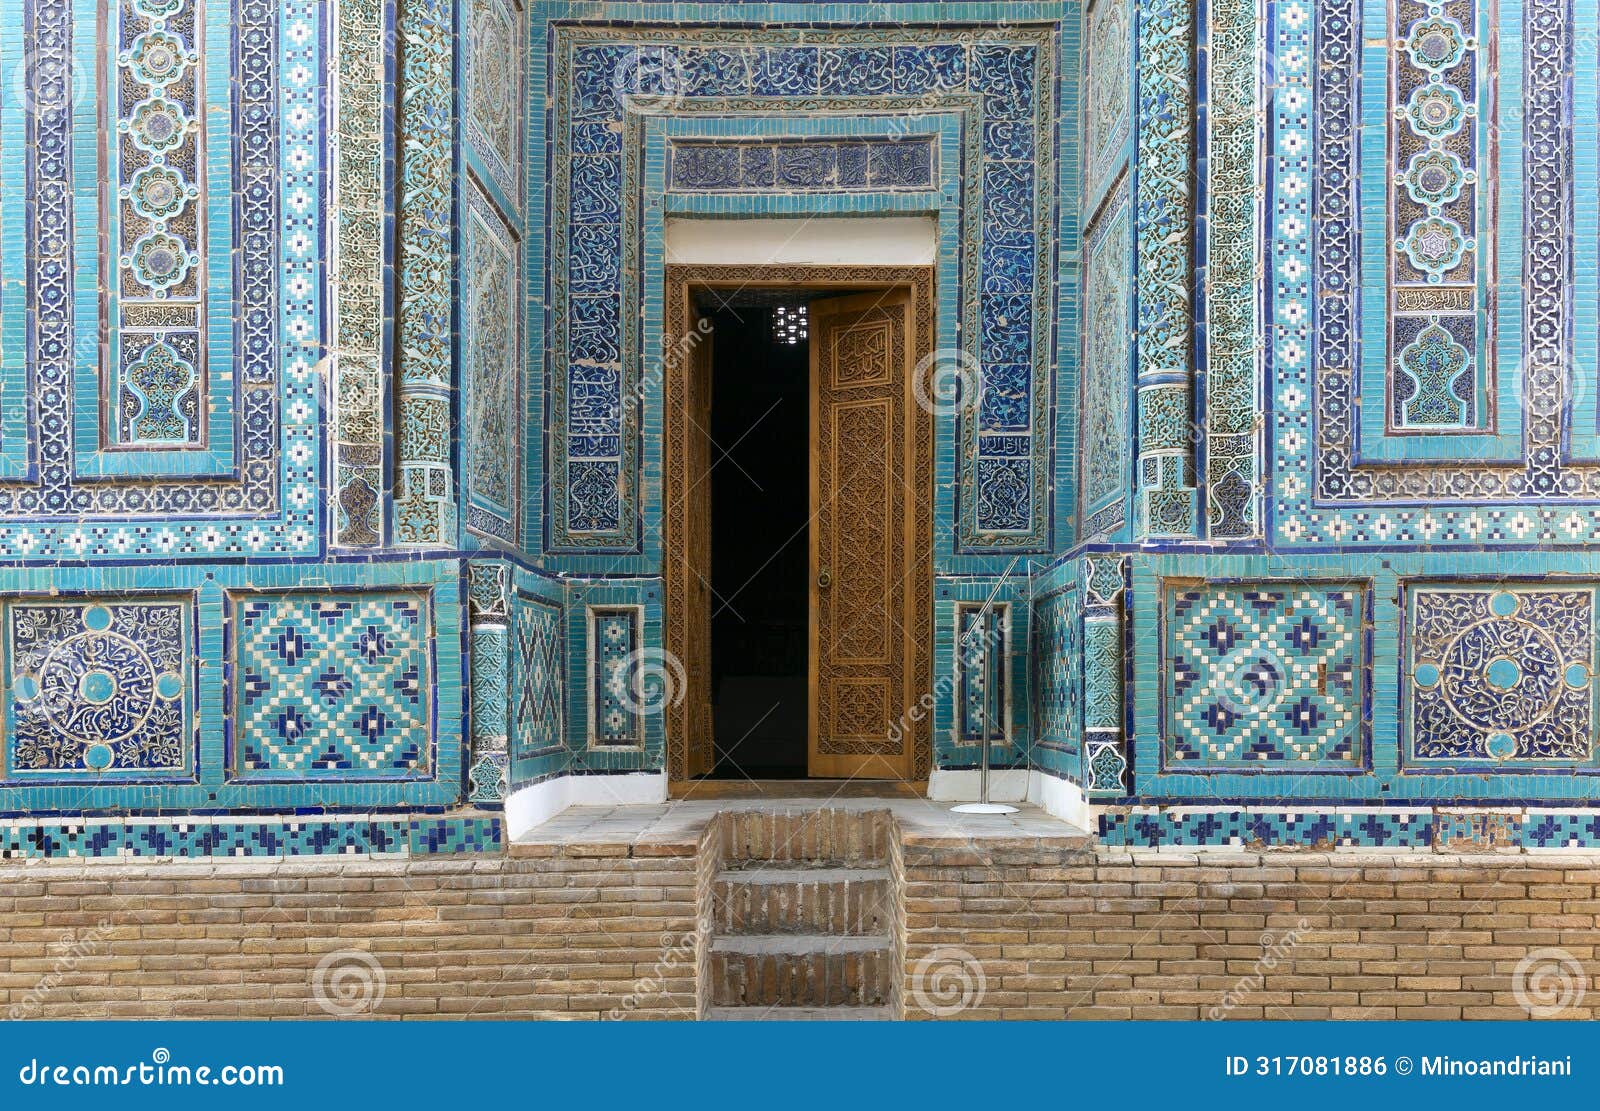 samarkand, uzbekistan - the complex of the mausoleum of shahi zinda